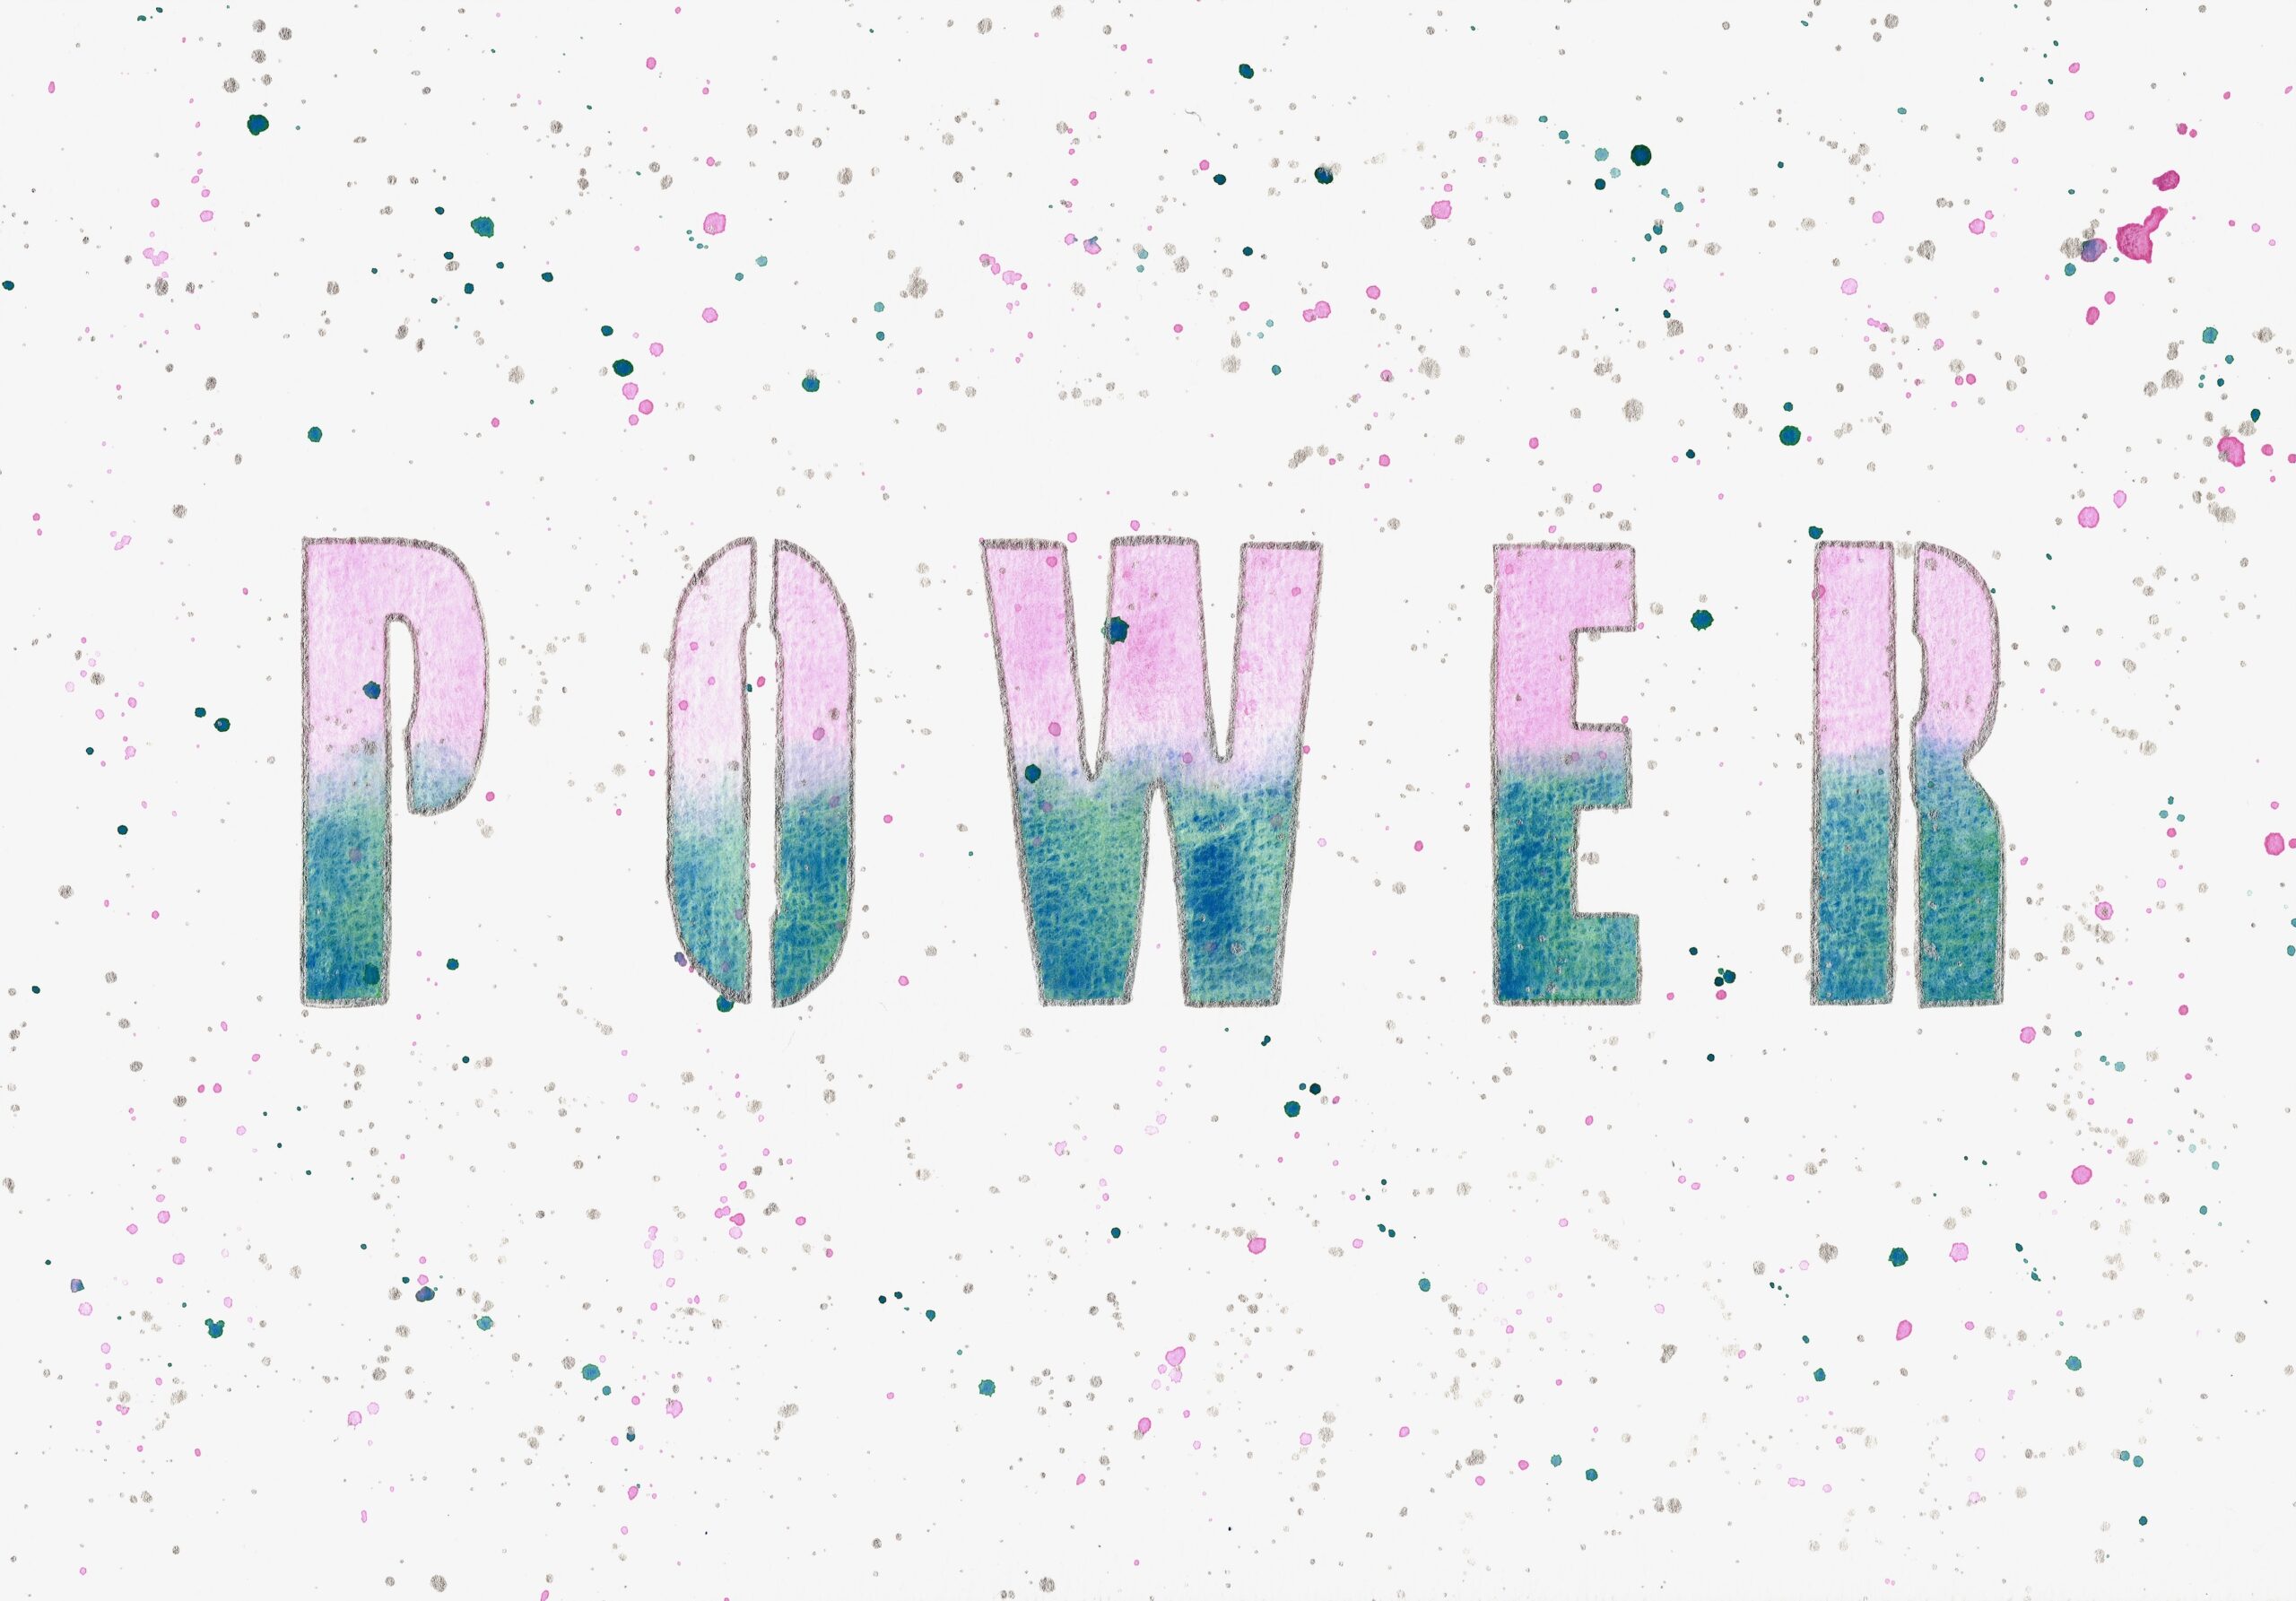 One little word: Power